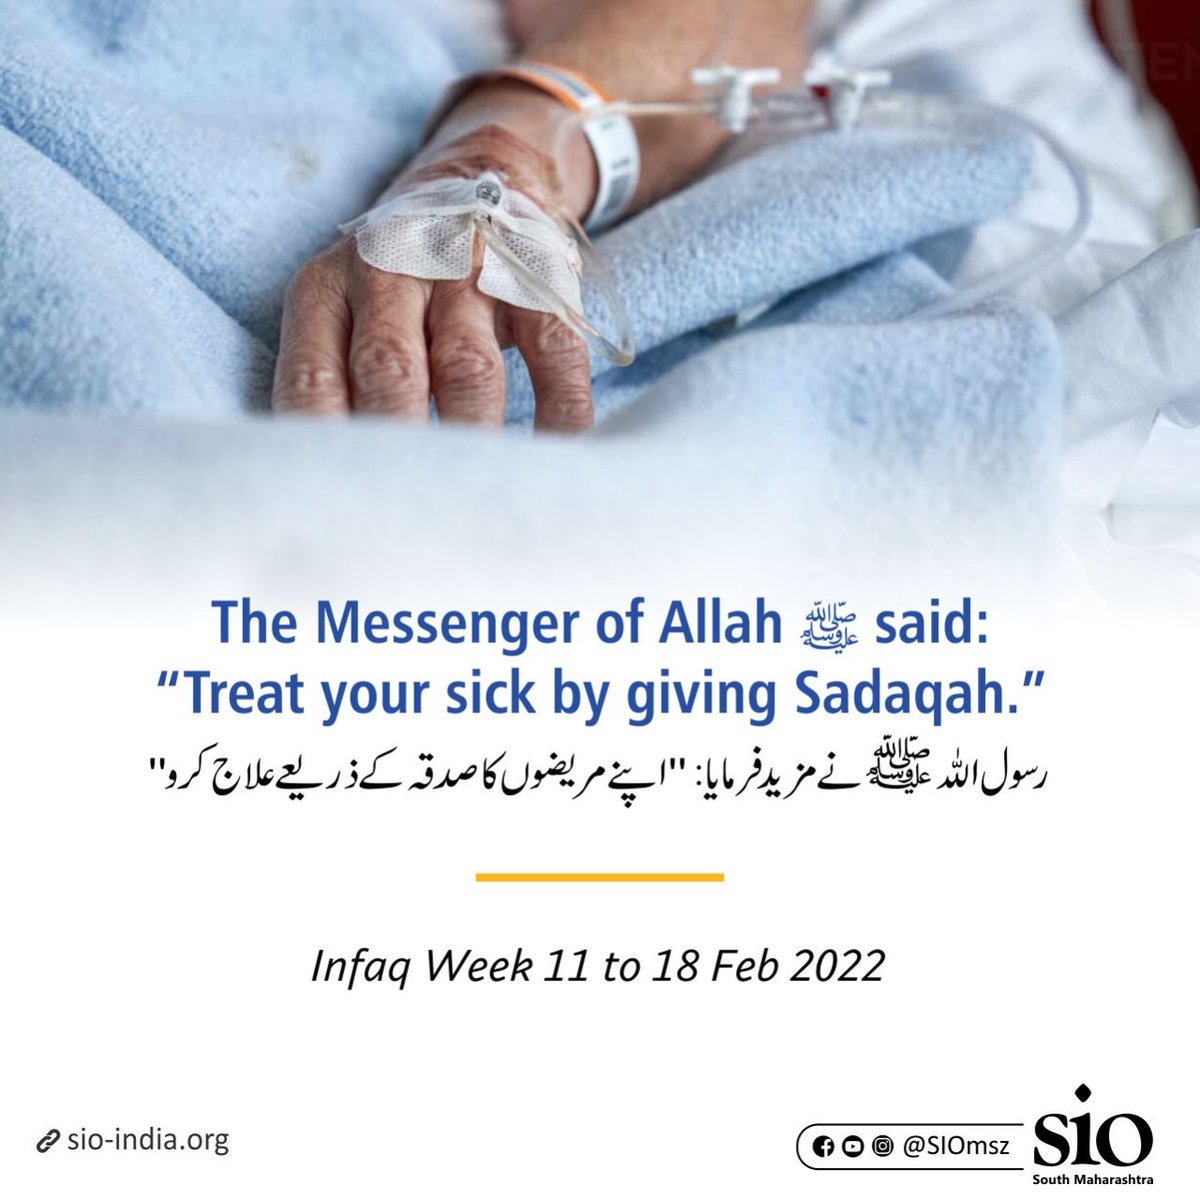 The Messenger of Allah Prophet Muhammad (pbuh) said :' Treat your sick by giving Sadqah.'

Infaq Week 11th Feb to 18th Feb

#infaqweek
#siomsz
#saturdaypost